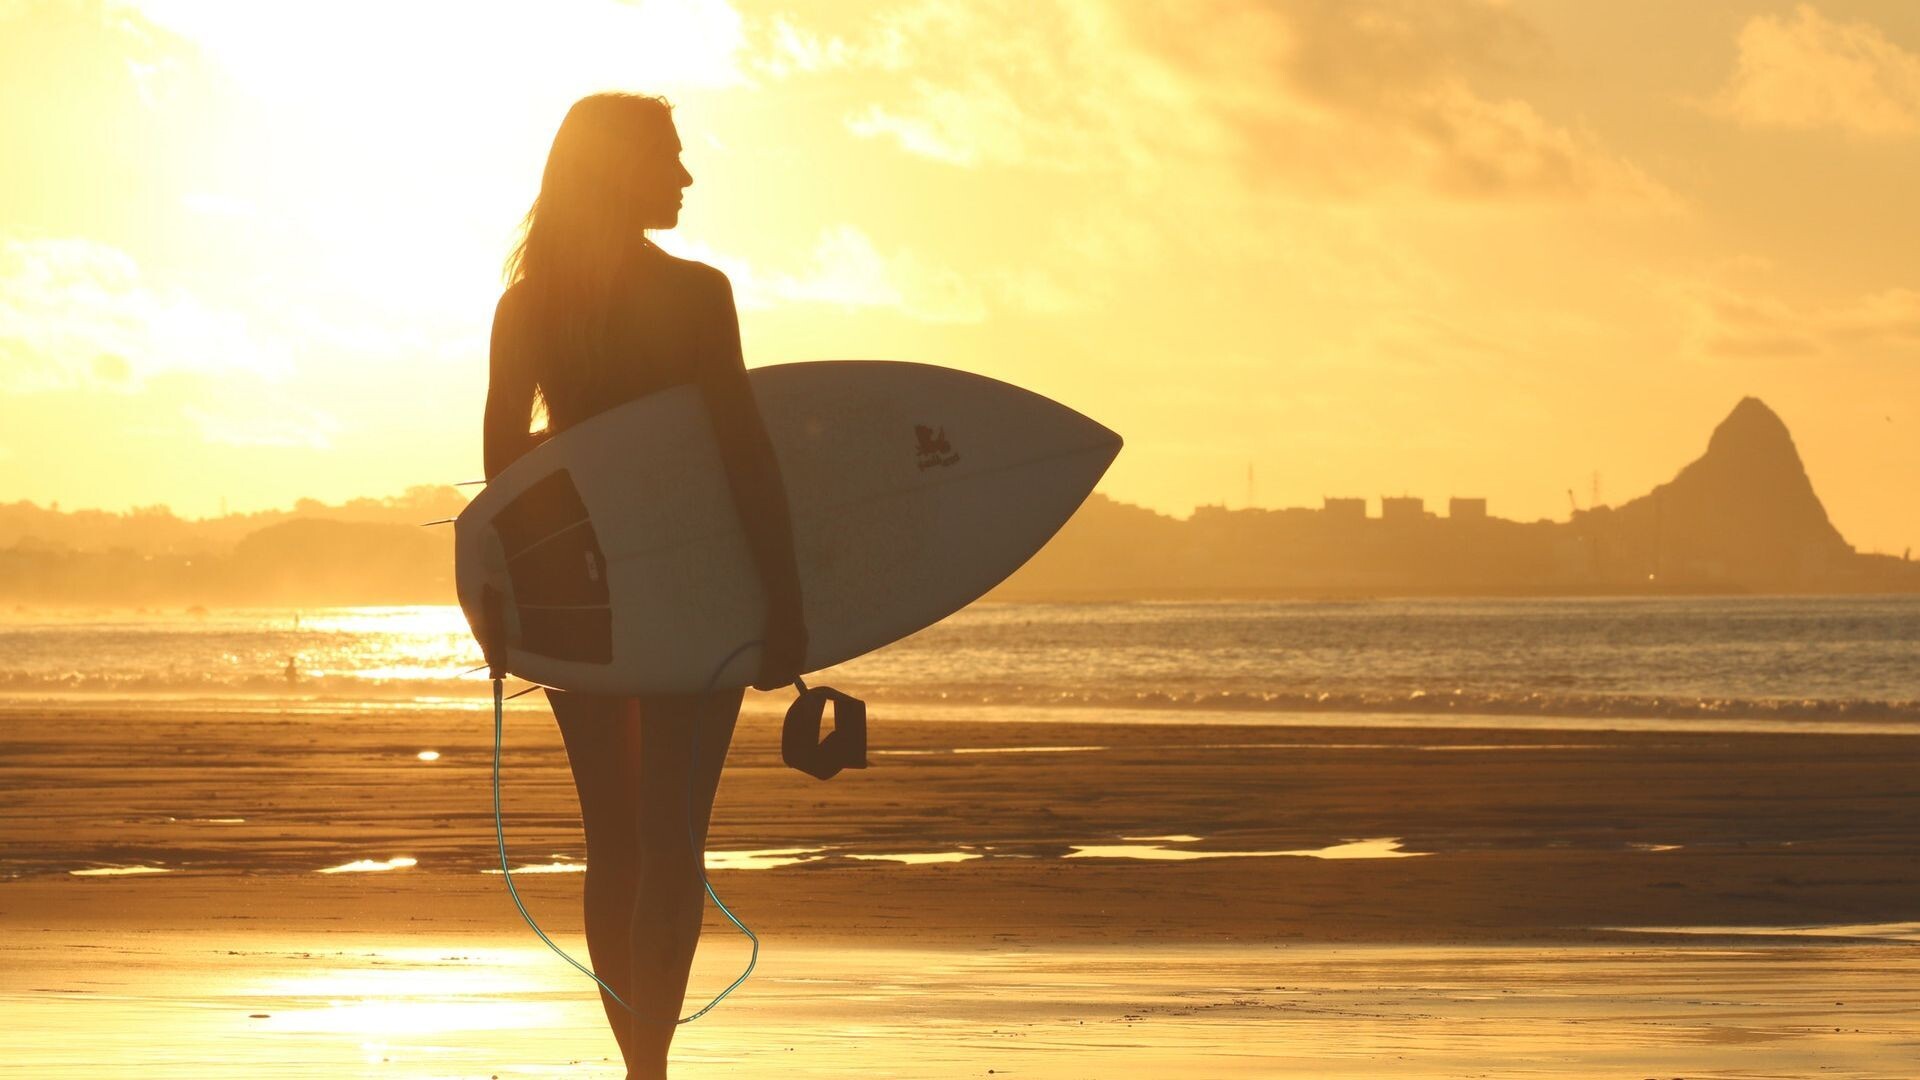 Girl Surfing: Riding a surfboard at sunset, Oahu's Waikiki Beach, Hawaii. 1920x1080 Full HD Background.